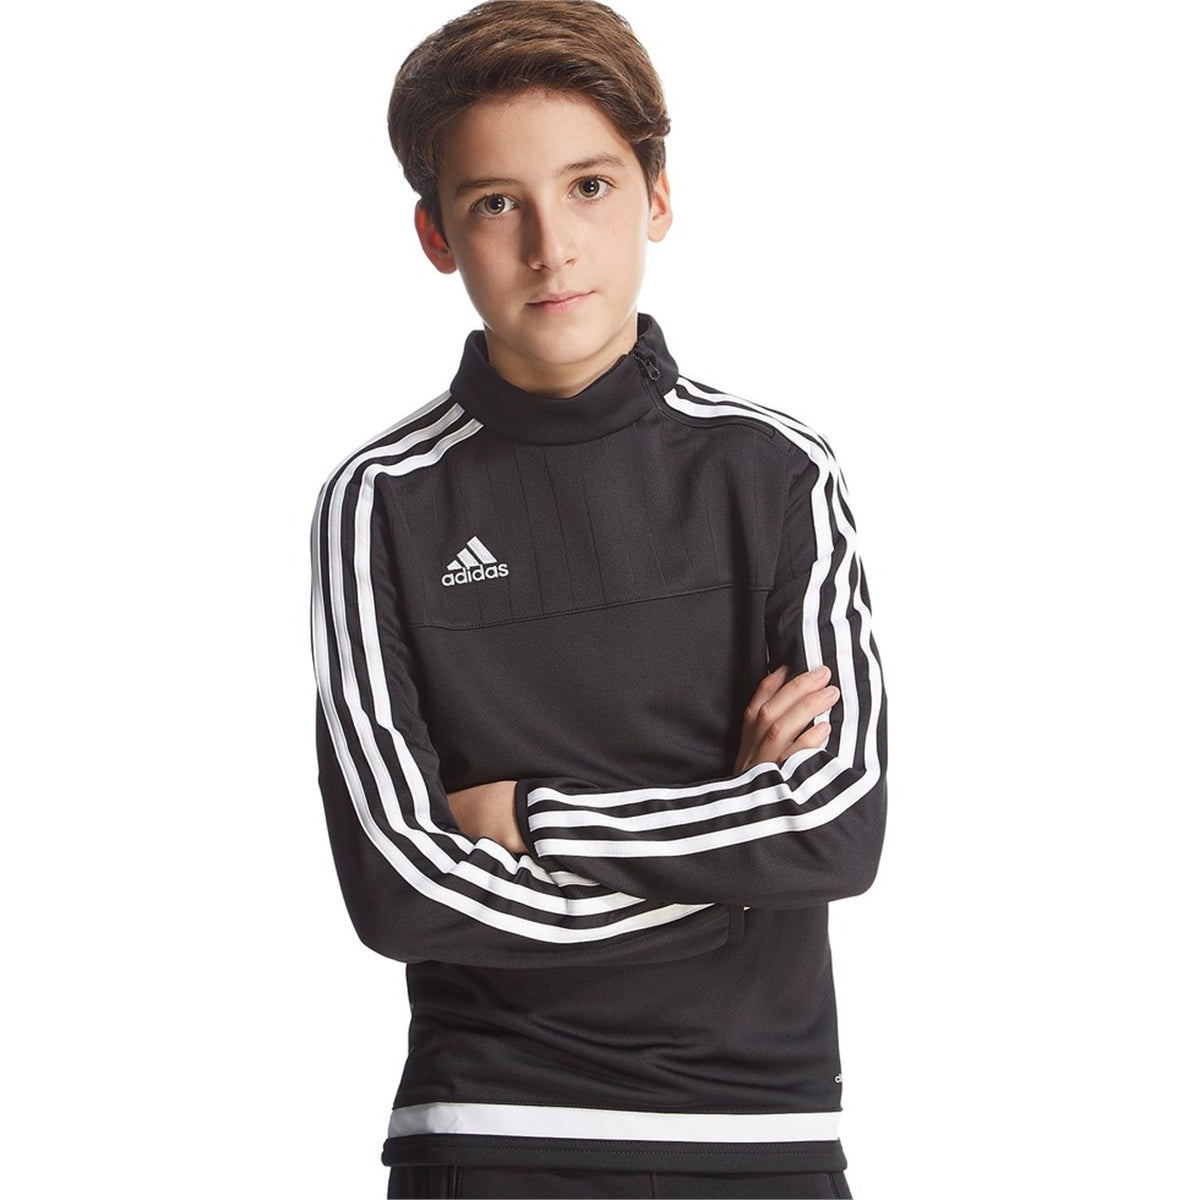 Adidas Boy Tiro 15 Youth Training Top